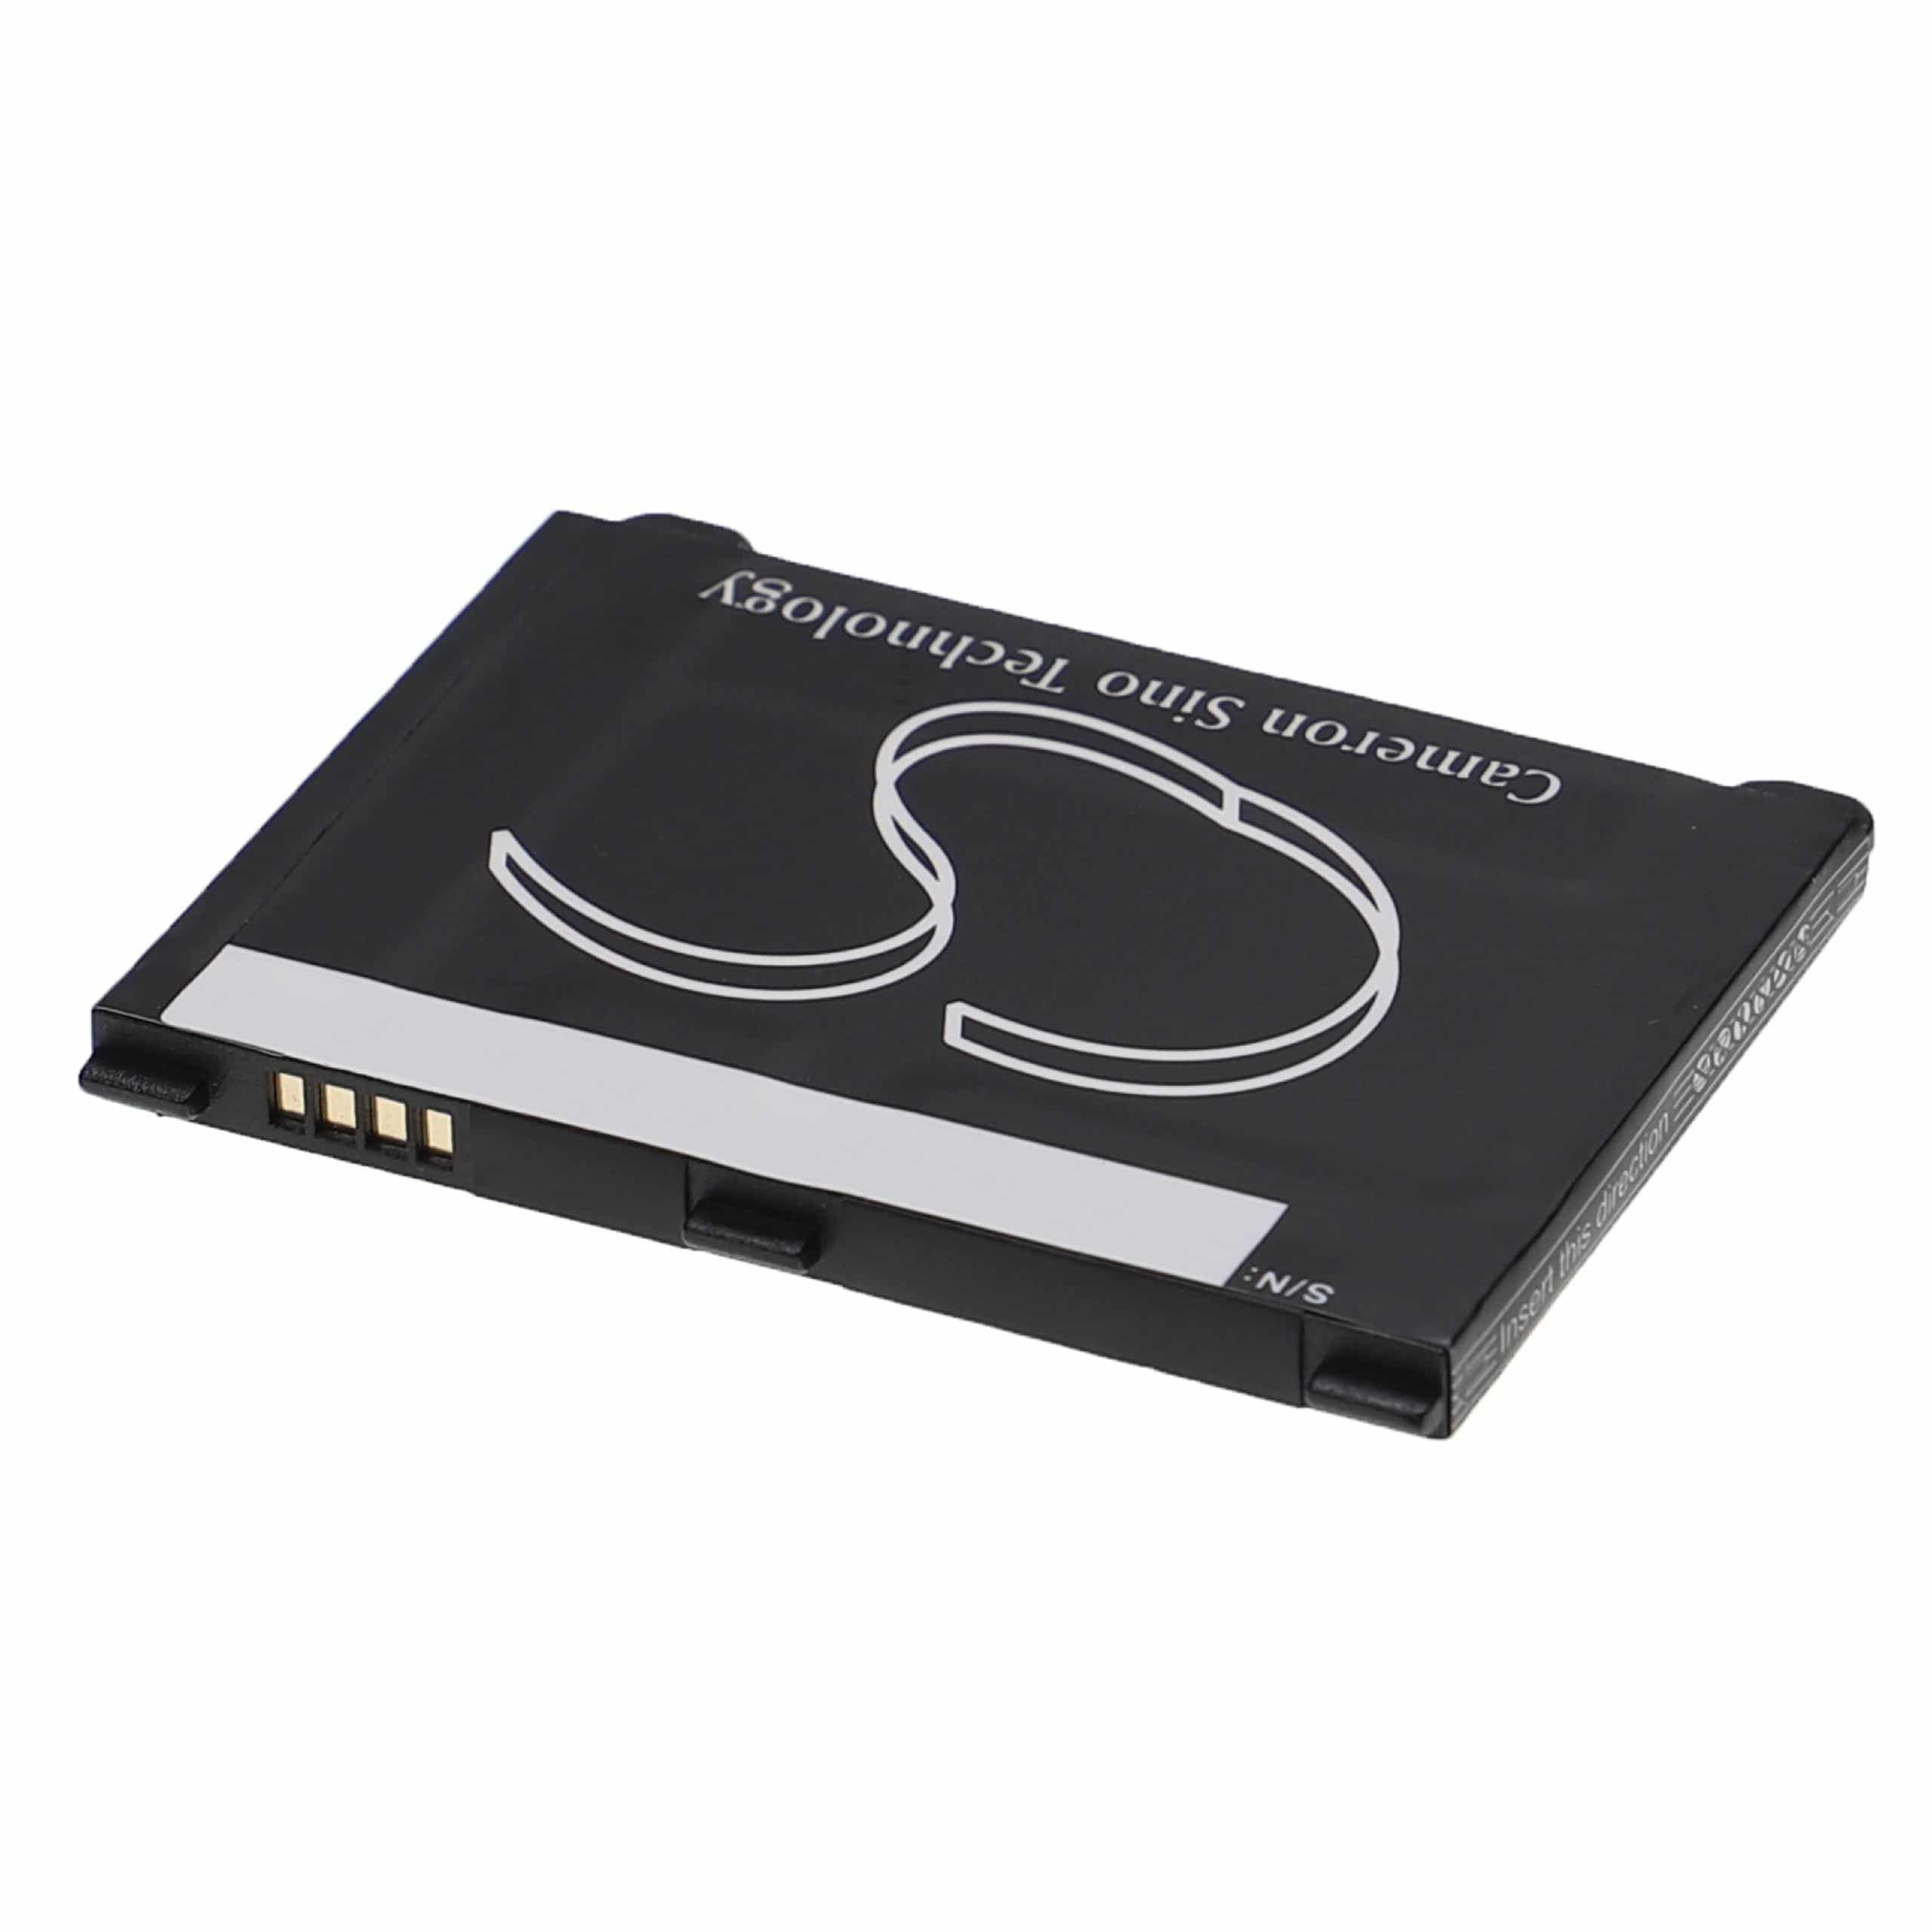 E-Book Battery Replacement for Amazon S11S01B - 1100mAh 3.7V Li-Ion